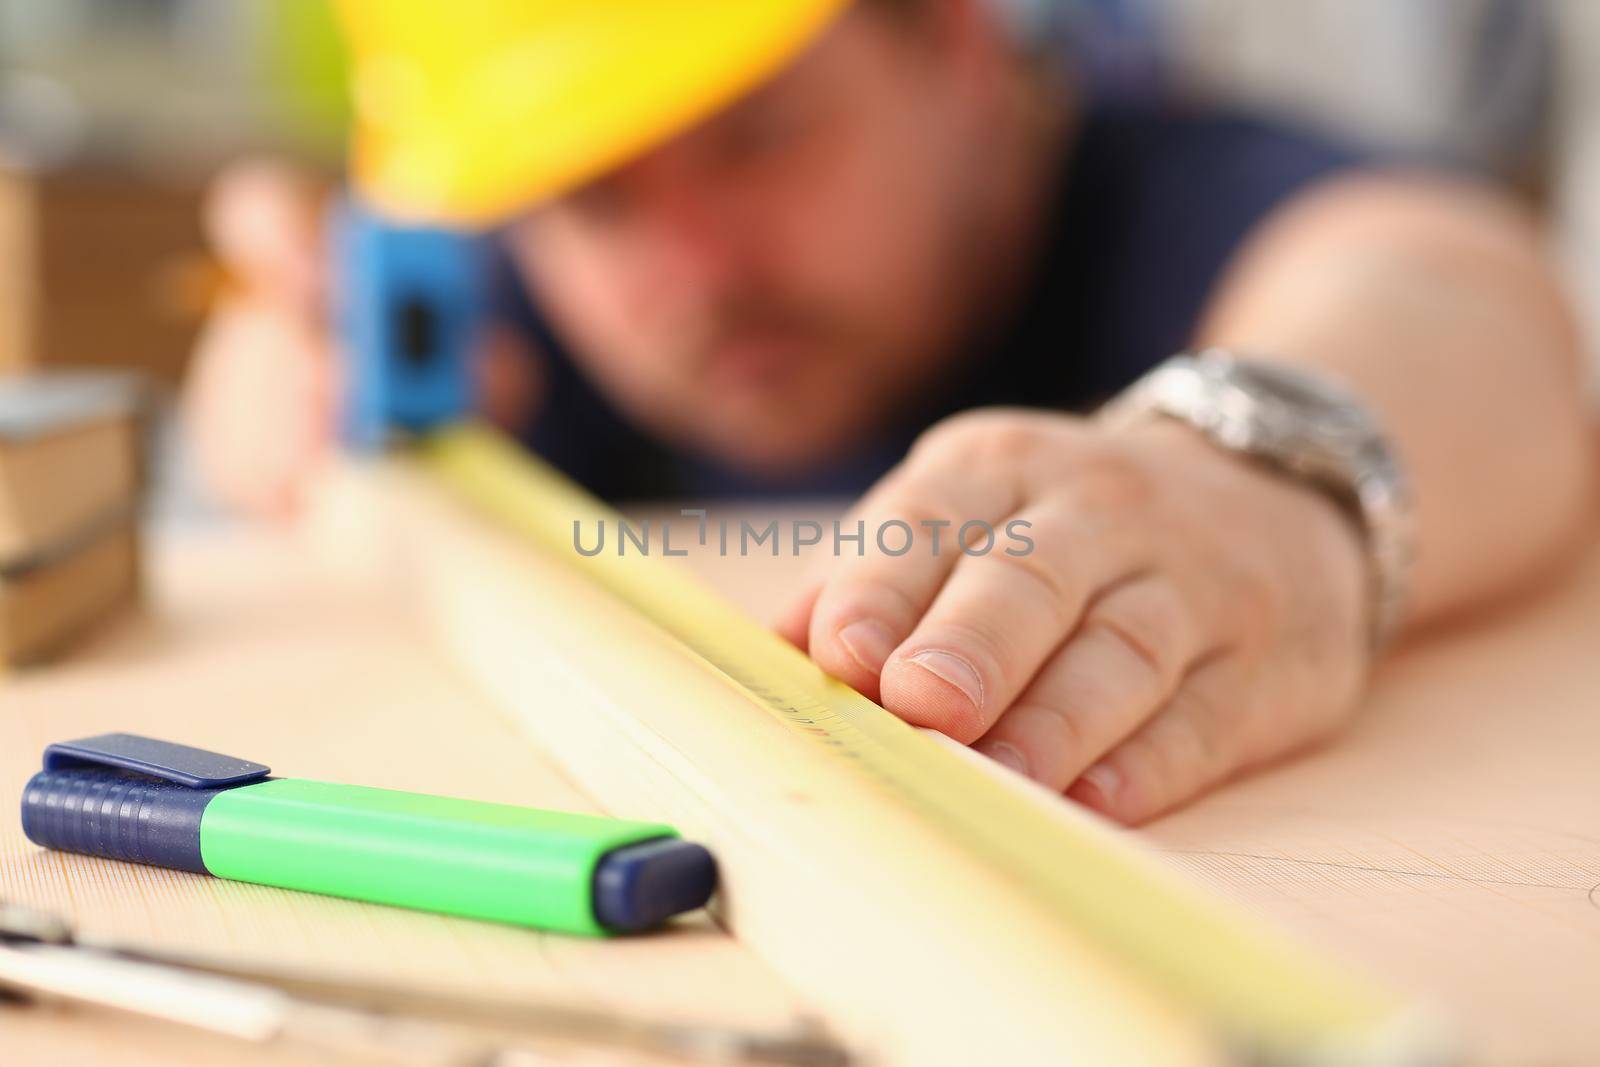 Arms of worker measuring wooden bar closeup. Manual job DIY inspiration improvement job fix shop graphic joinery startup workplace idea designer career ruler industrial education concept